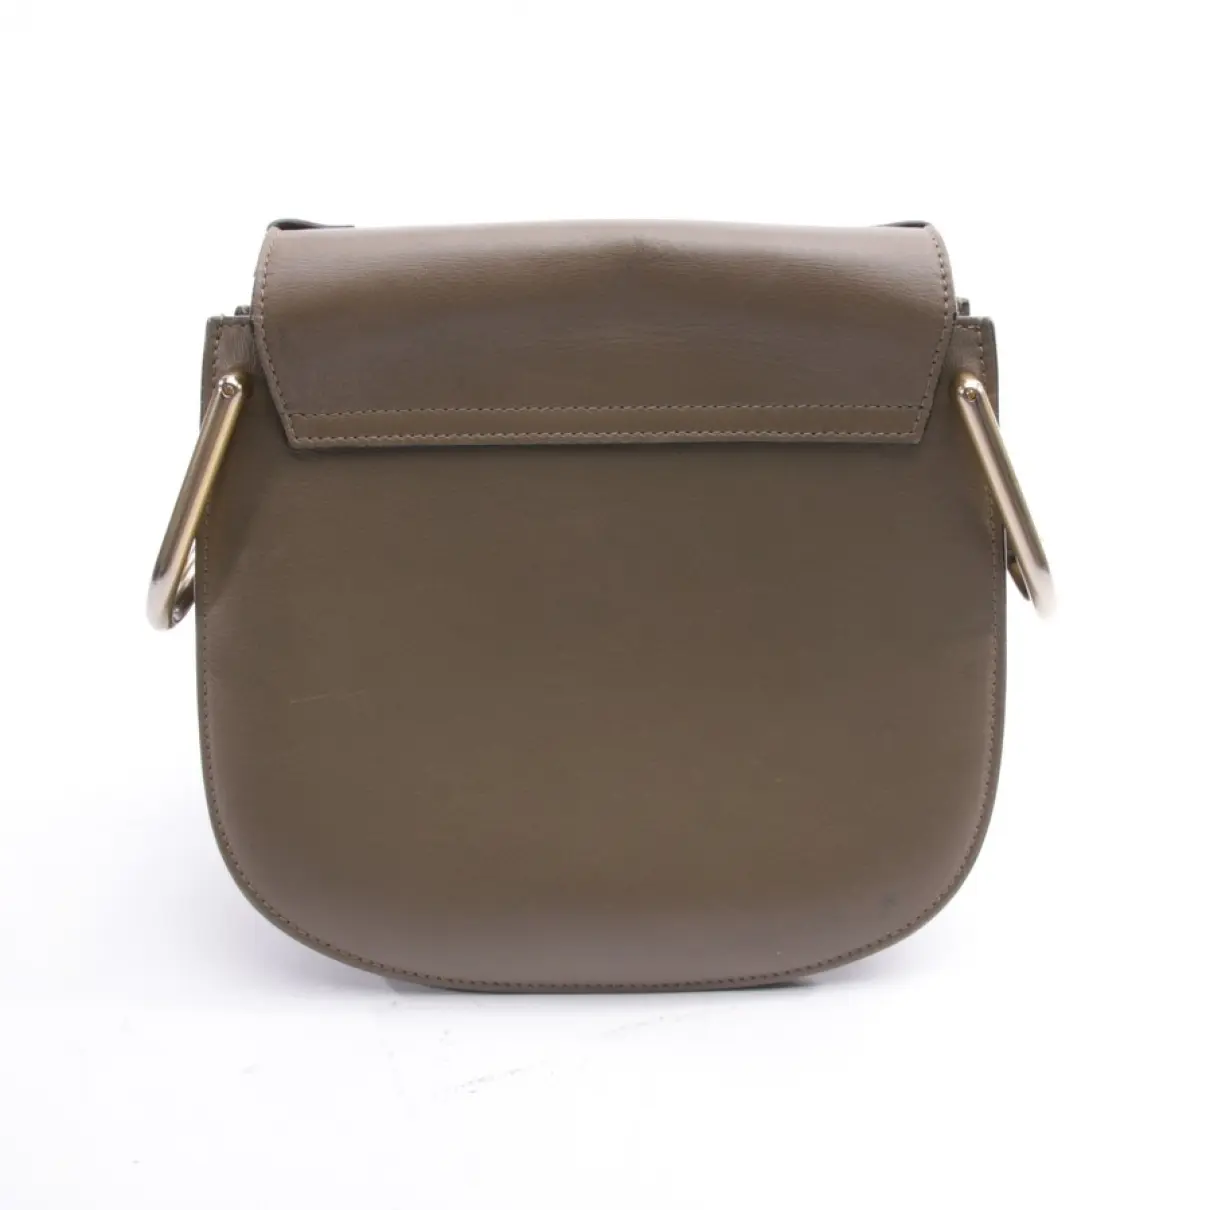 Buy Chloé Hudson leather crossbody bag online